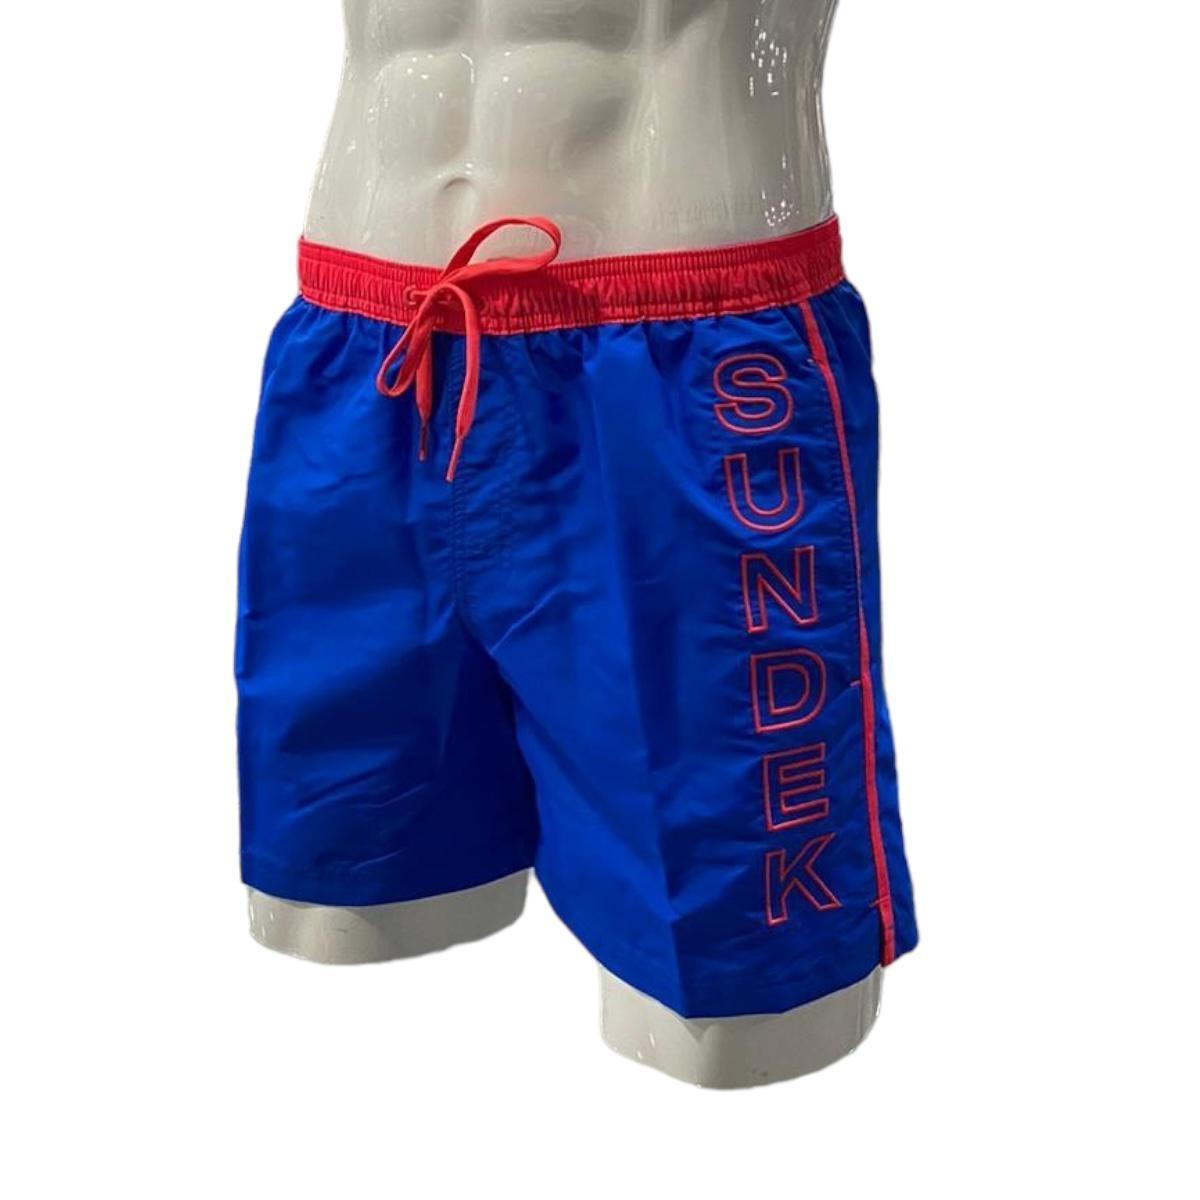 Boxer Mare Uomo Sundek m732 printed